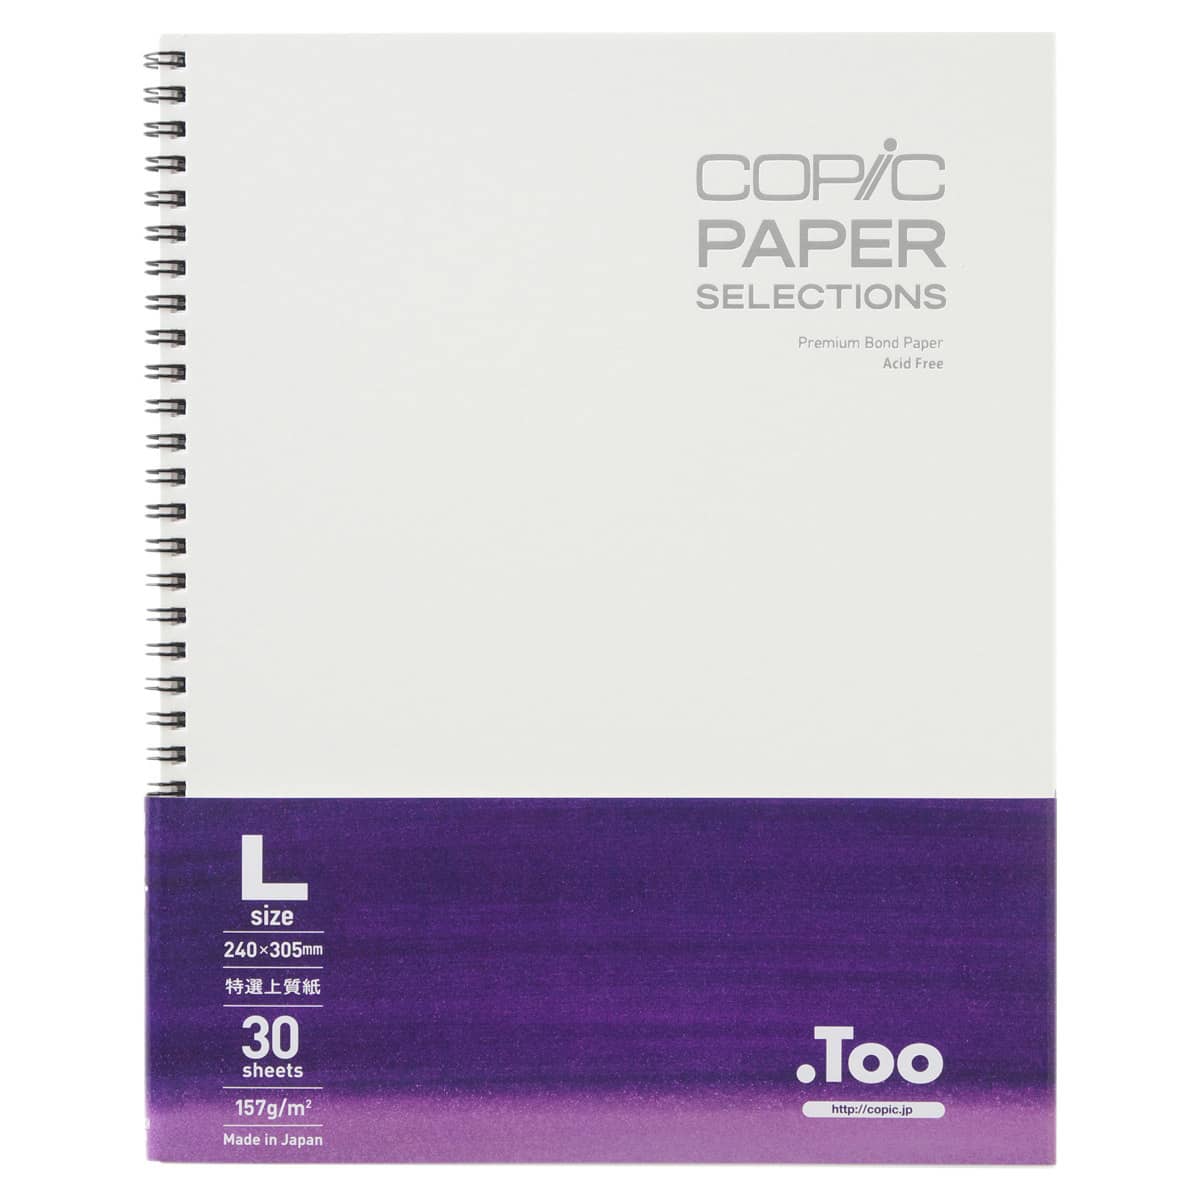 https://www.jerrysartarama.com/media/catalog/product/c/o/copic-9x12-paper-spiral-notebook-30-sheets-sw-v35580.jpg